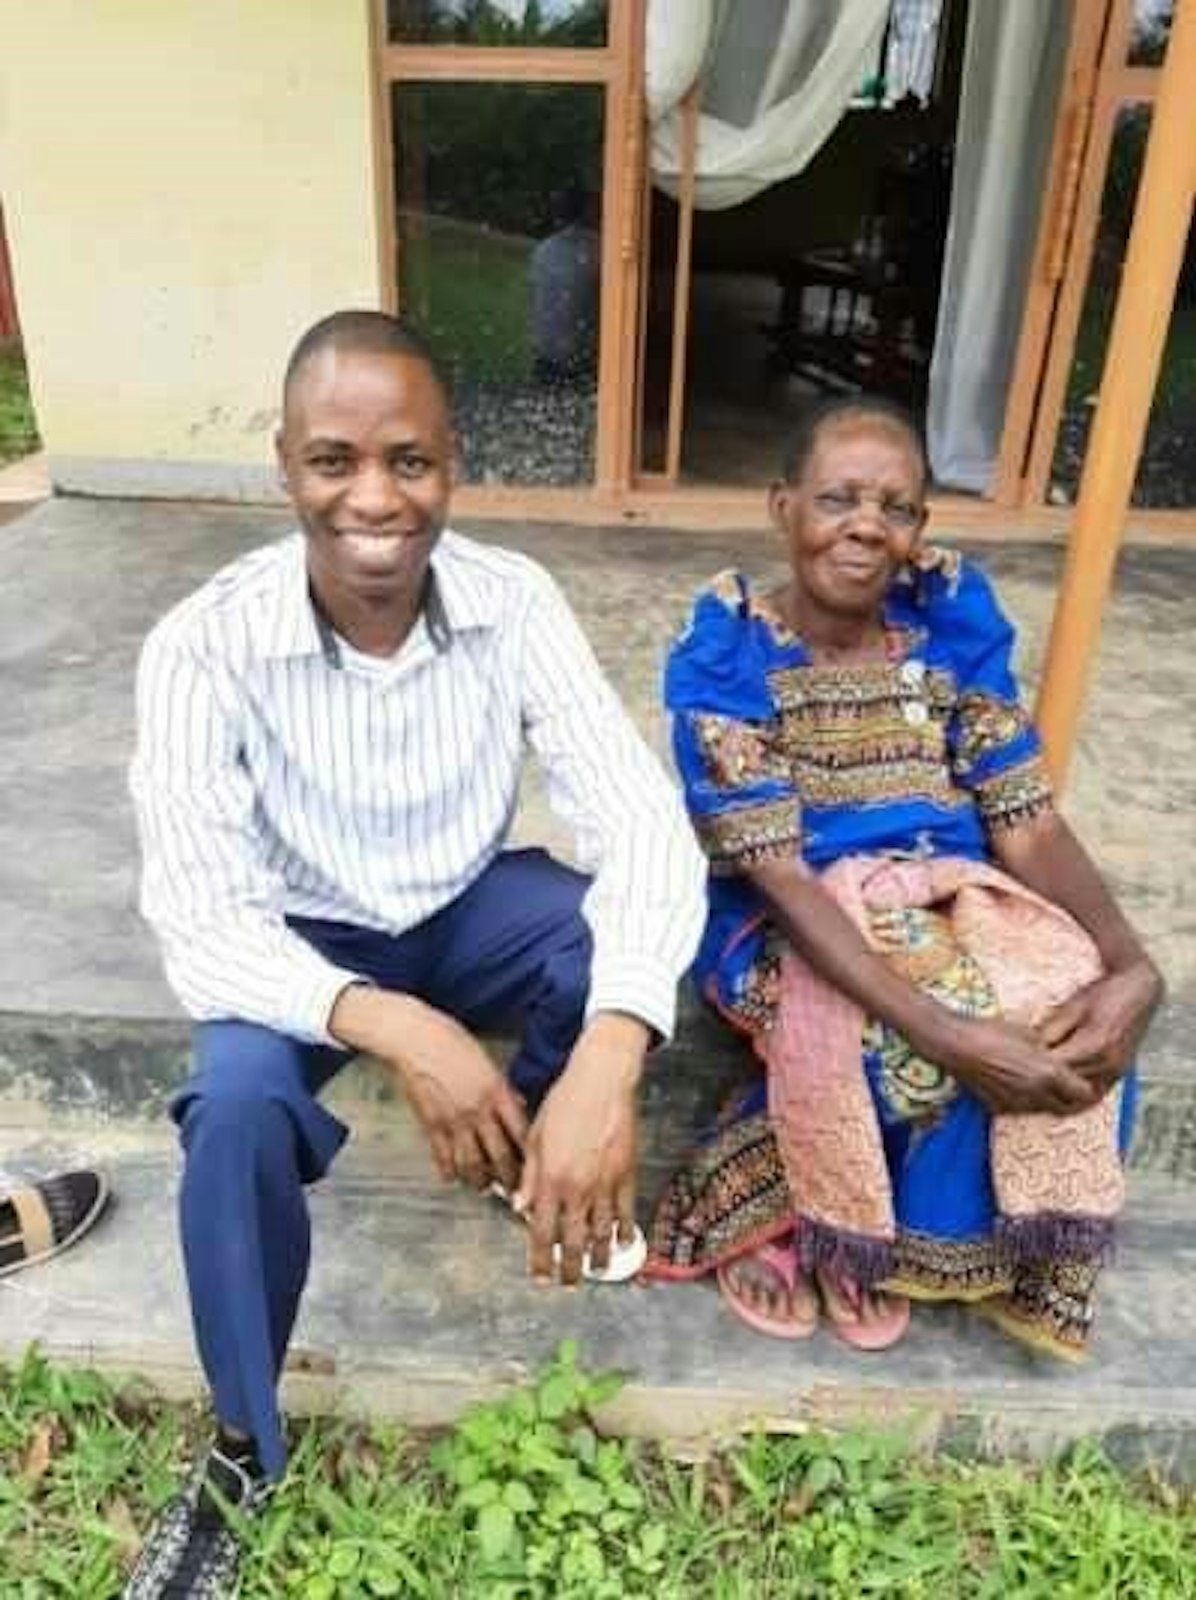 Joseph Kirembwe disfruta de una esperada visita con su madre, Cotilda Nakamatte, en la casa familiar de Uganda. (Cortesía de Joseph Kirembwe)